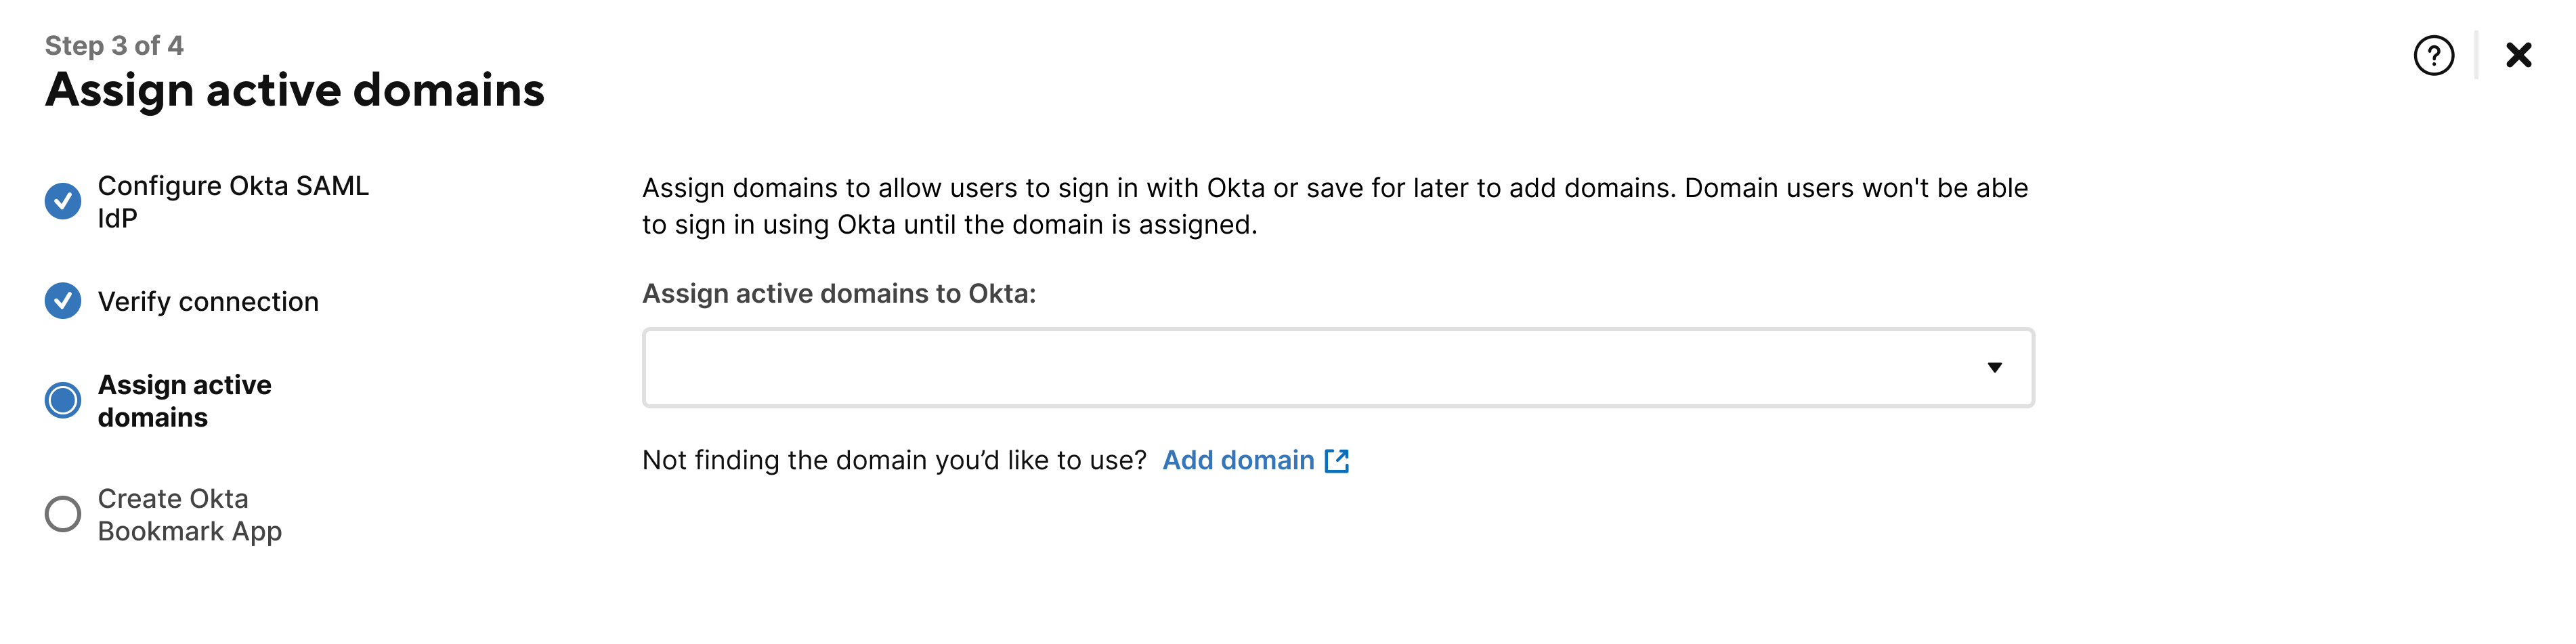 Assign active domains to Okta SAML setup